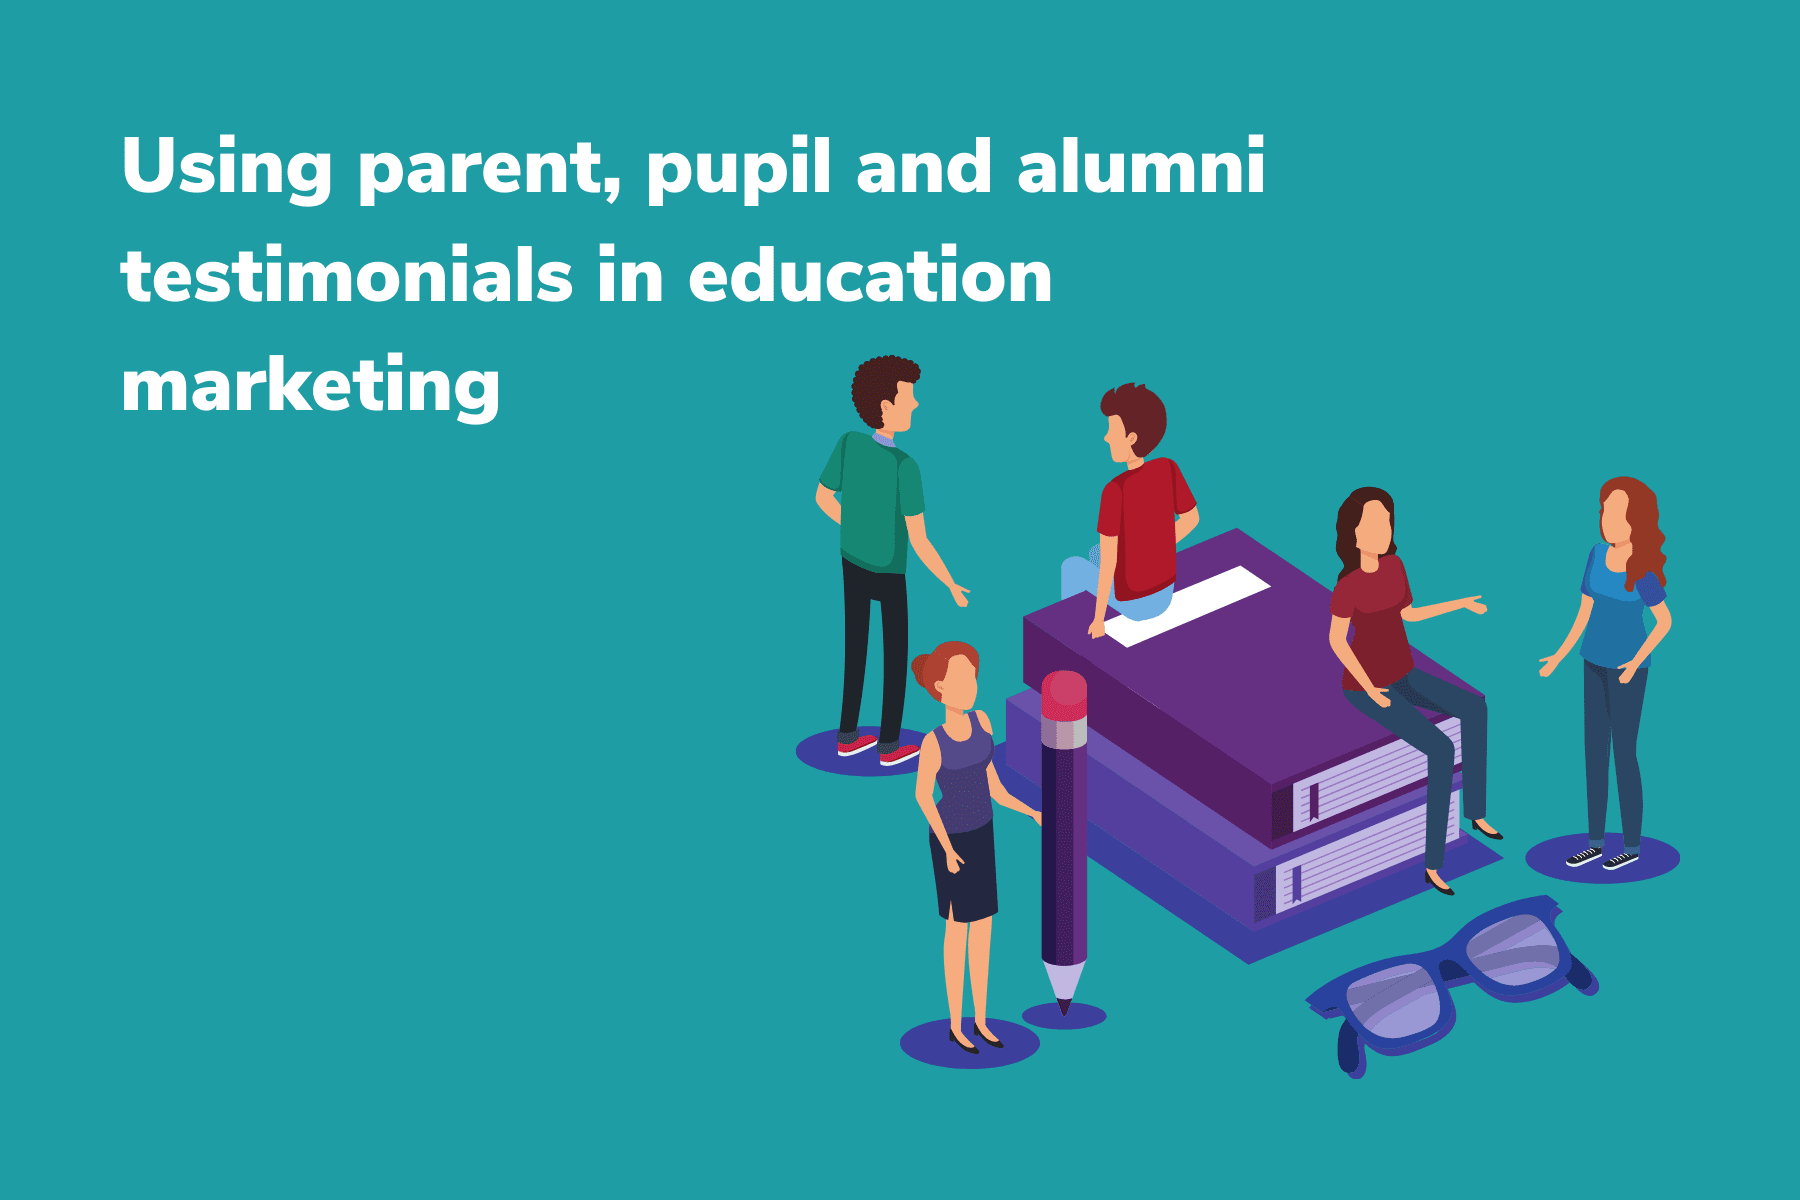 Using parent, pupil and alumni testimonials in education marketing